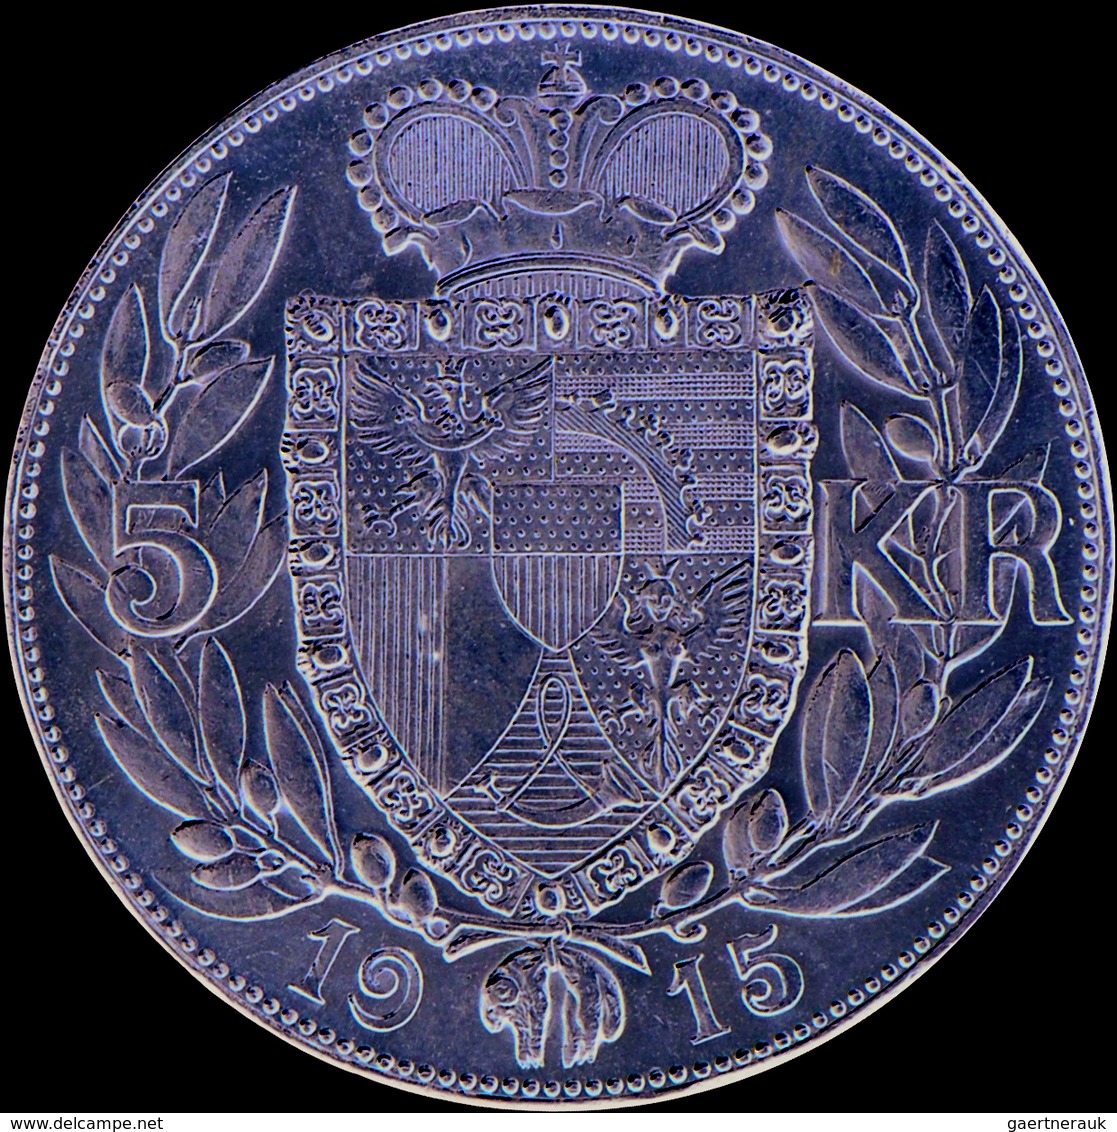 Liechtenstein: Johann II. 1858-1929: 5 Kronen 1915, Dav. 216, HMZ 2-1376e, Auflage 10.000 Expl., Fei - Liechtenstein